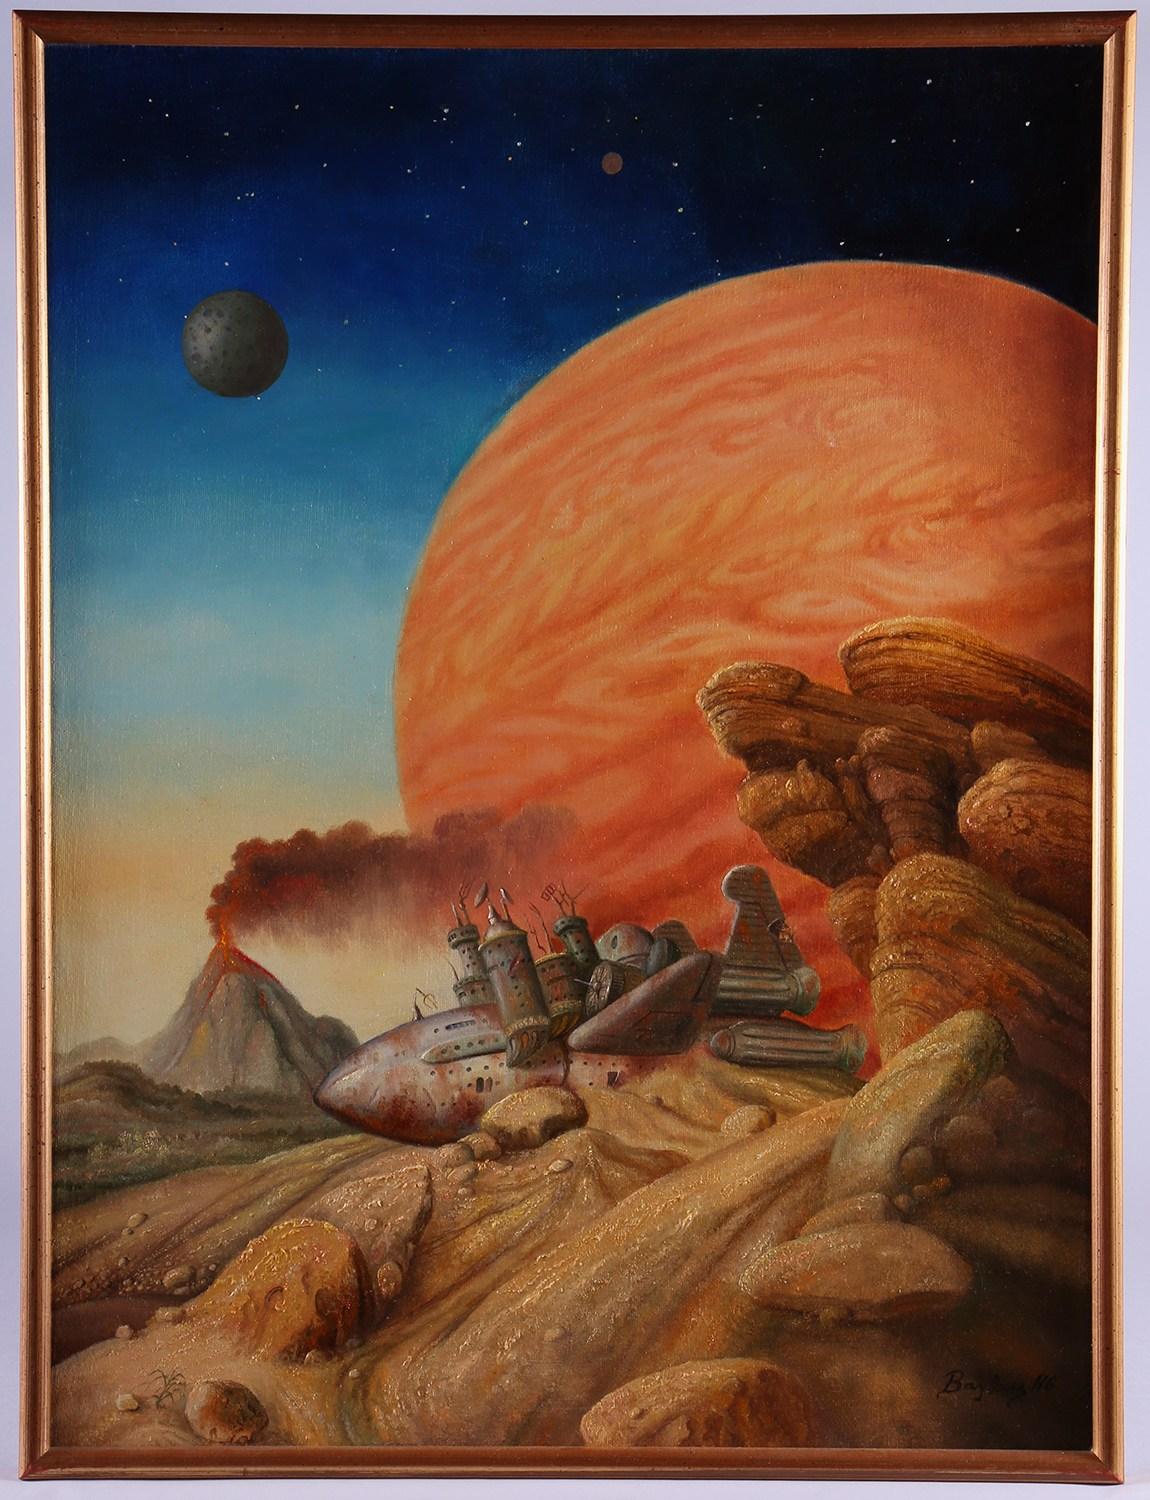 Life on Mars - Painting by Raymond Bayless